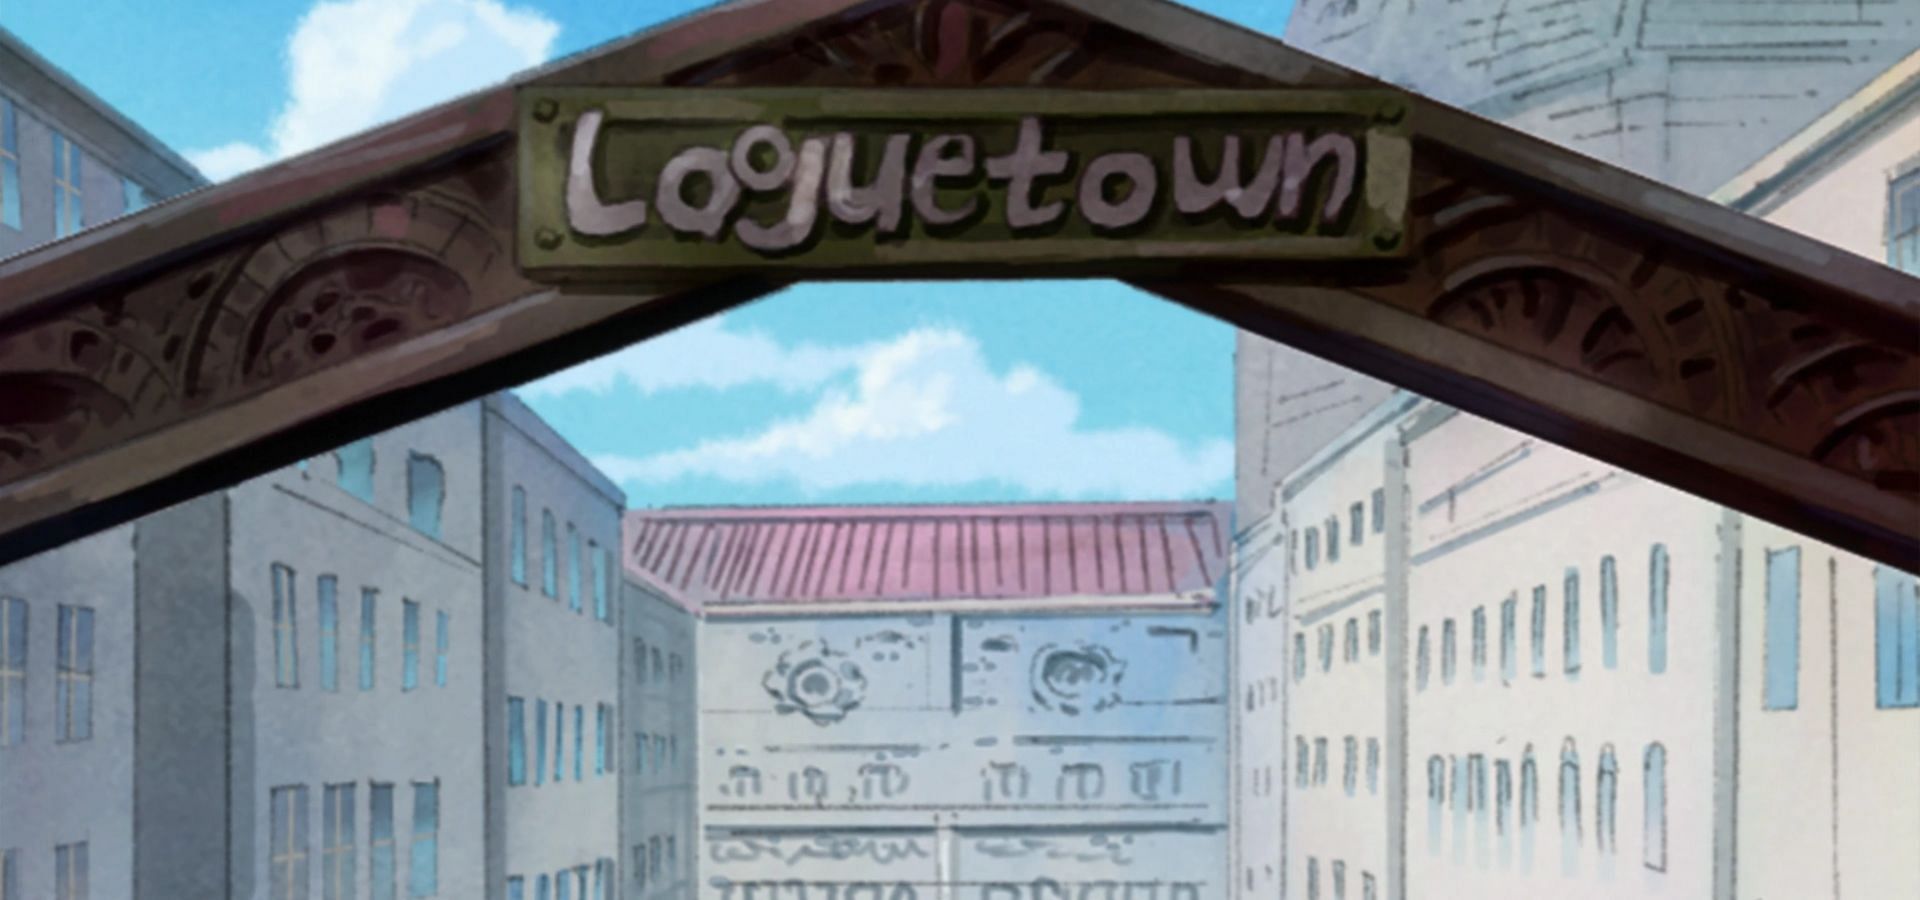 Loguetown (Image via Toei Animation, One Piece)